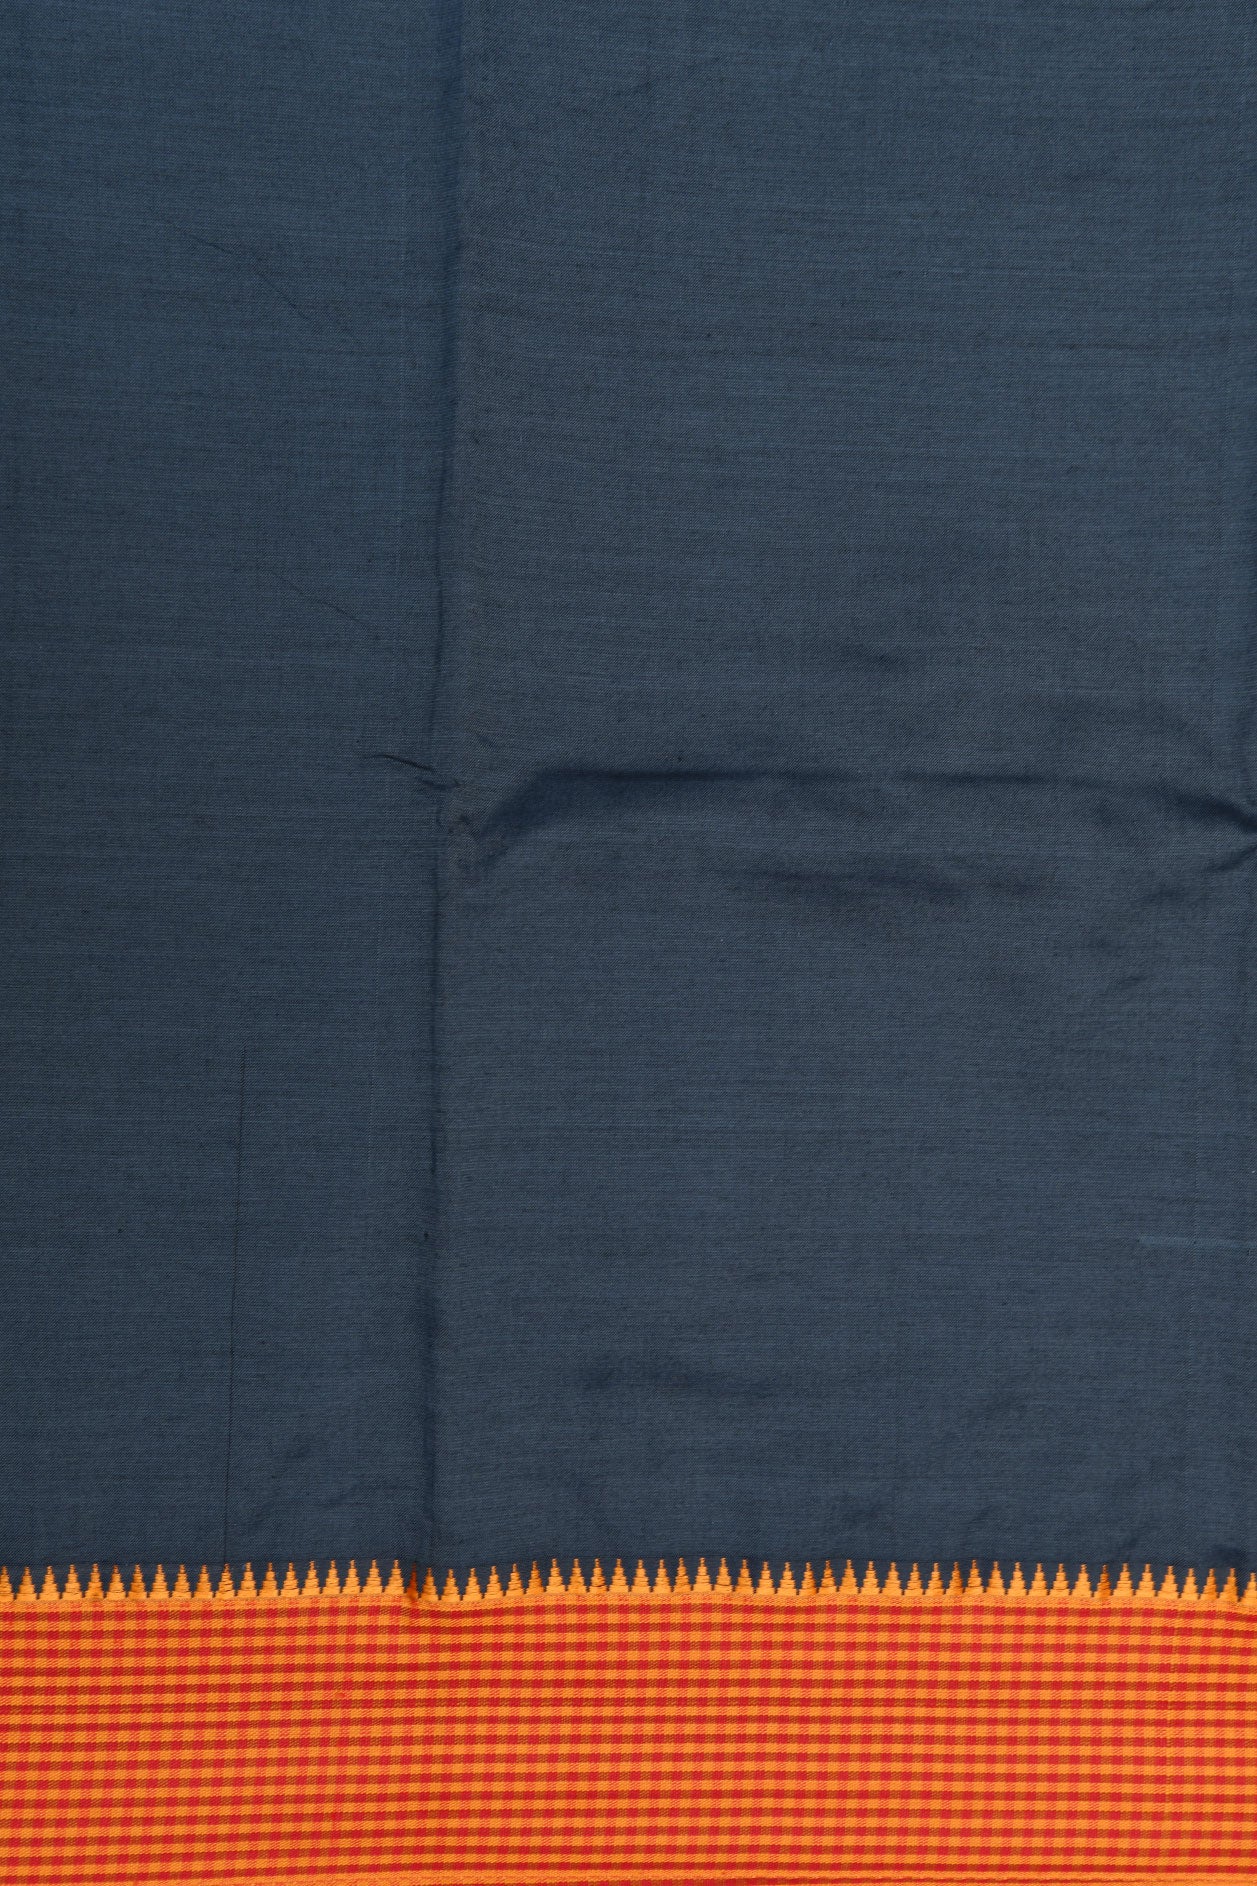 Thread Work Checks Border In Plain Charcoal Grey Dharwad Cotton Saree